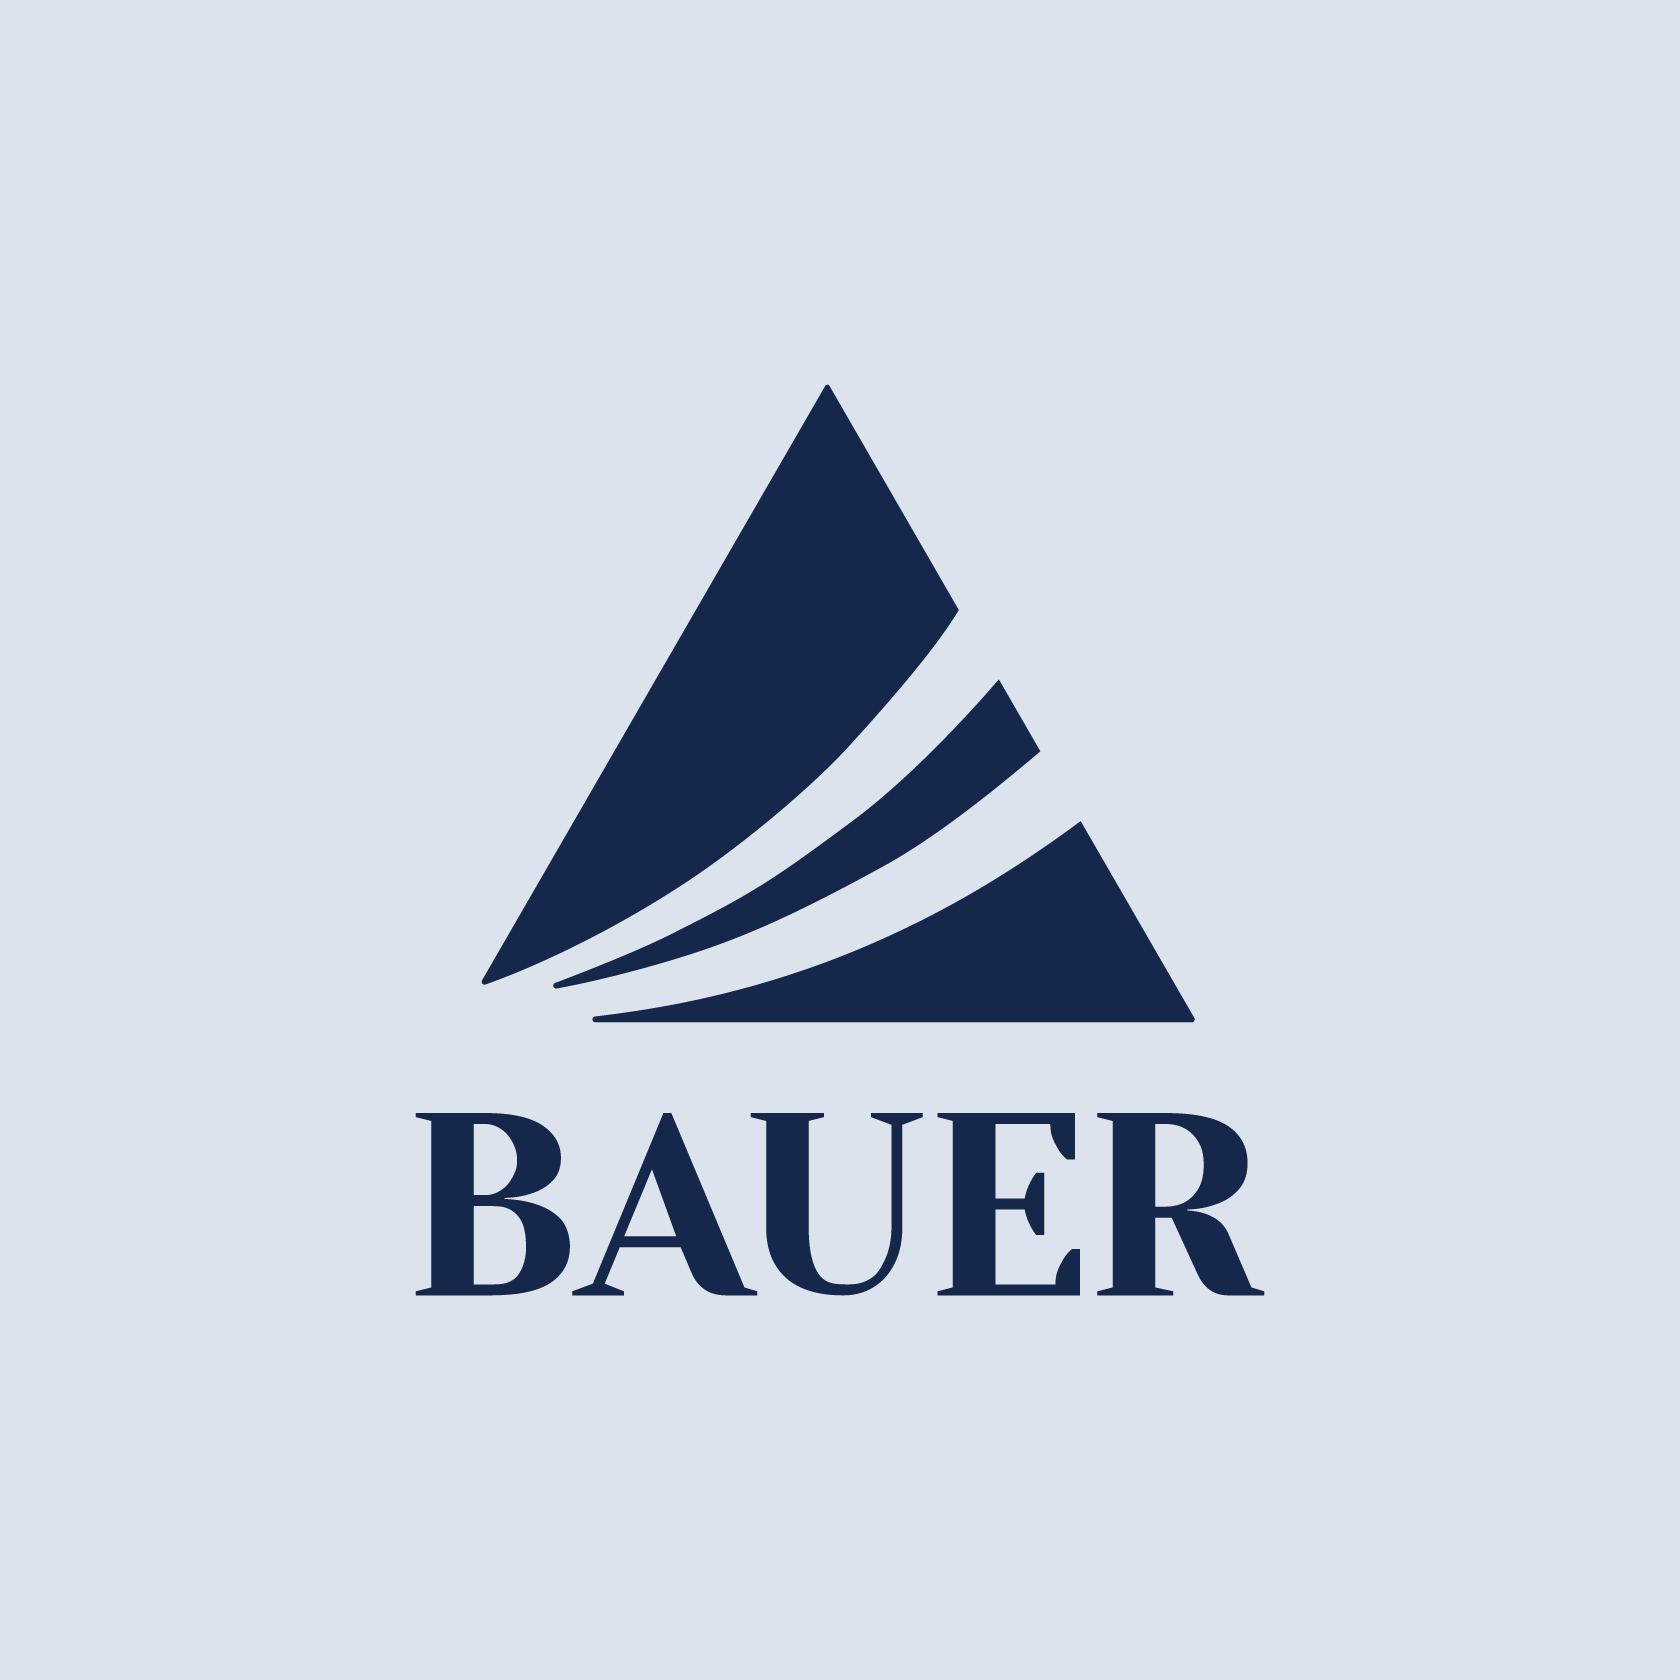 Bauer Краснодар.